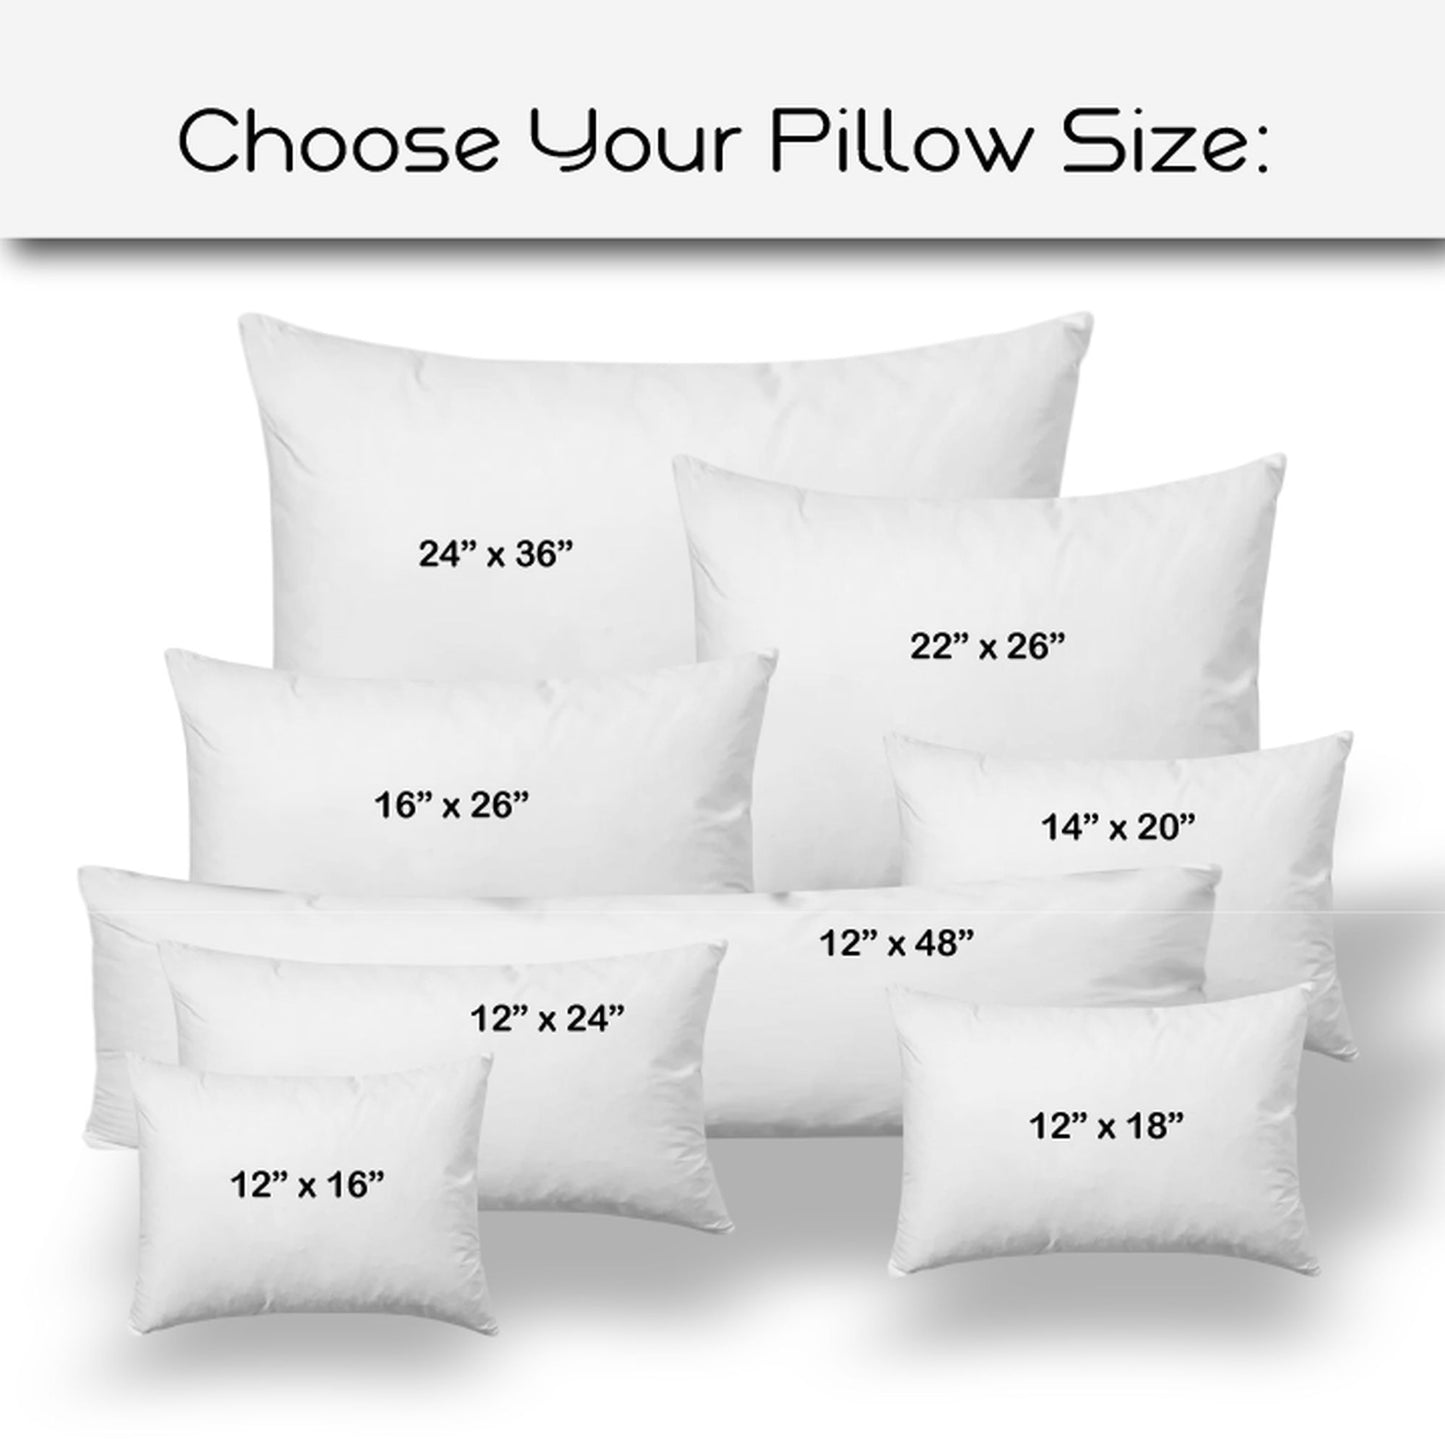 SANDY Indoor/Outdoor Soft Royal Pillow, Zipper Cover w/Insert, 12x18